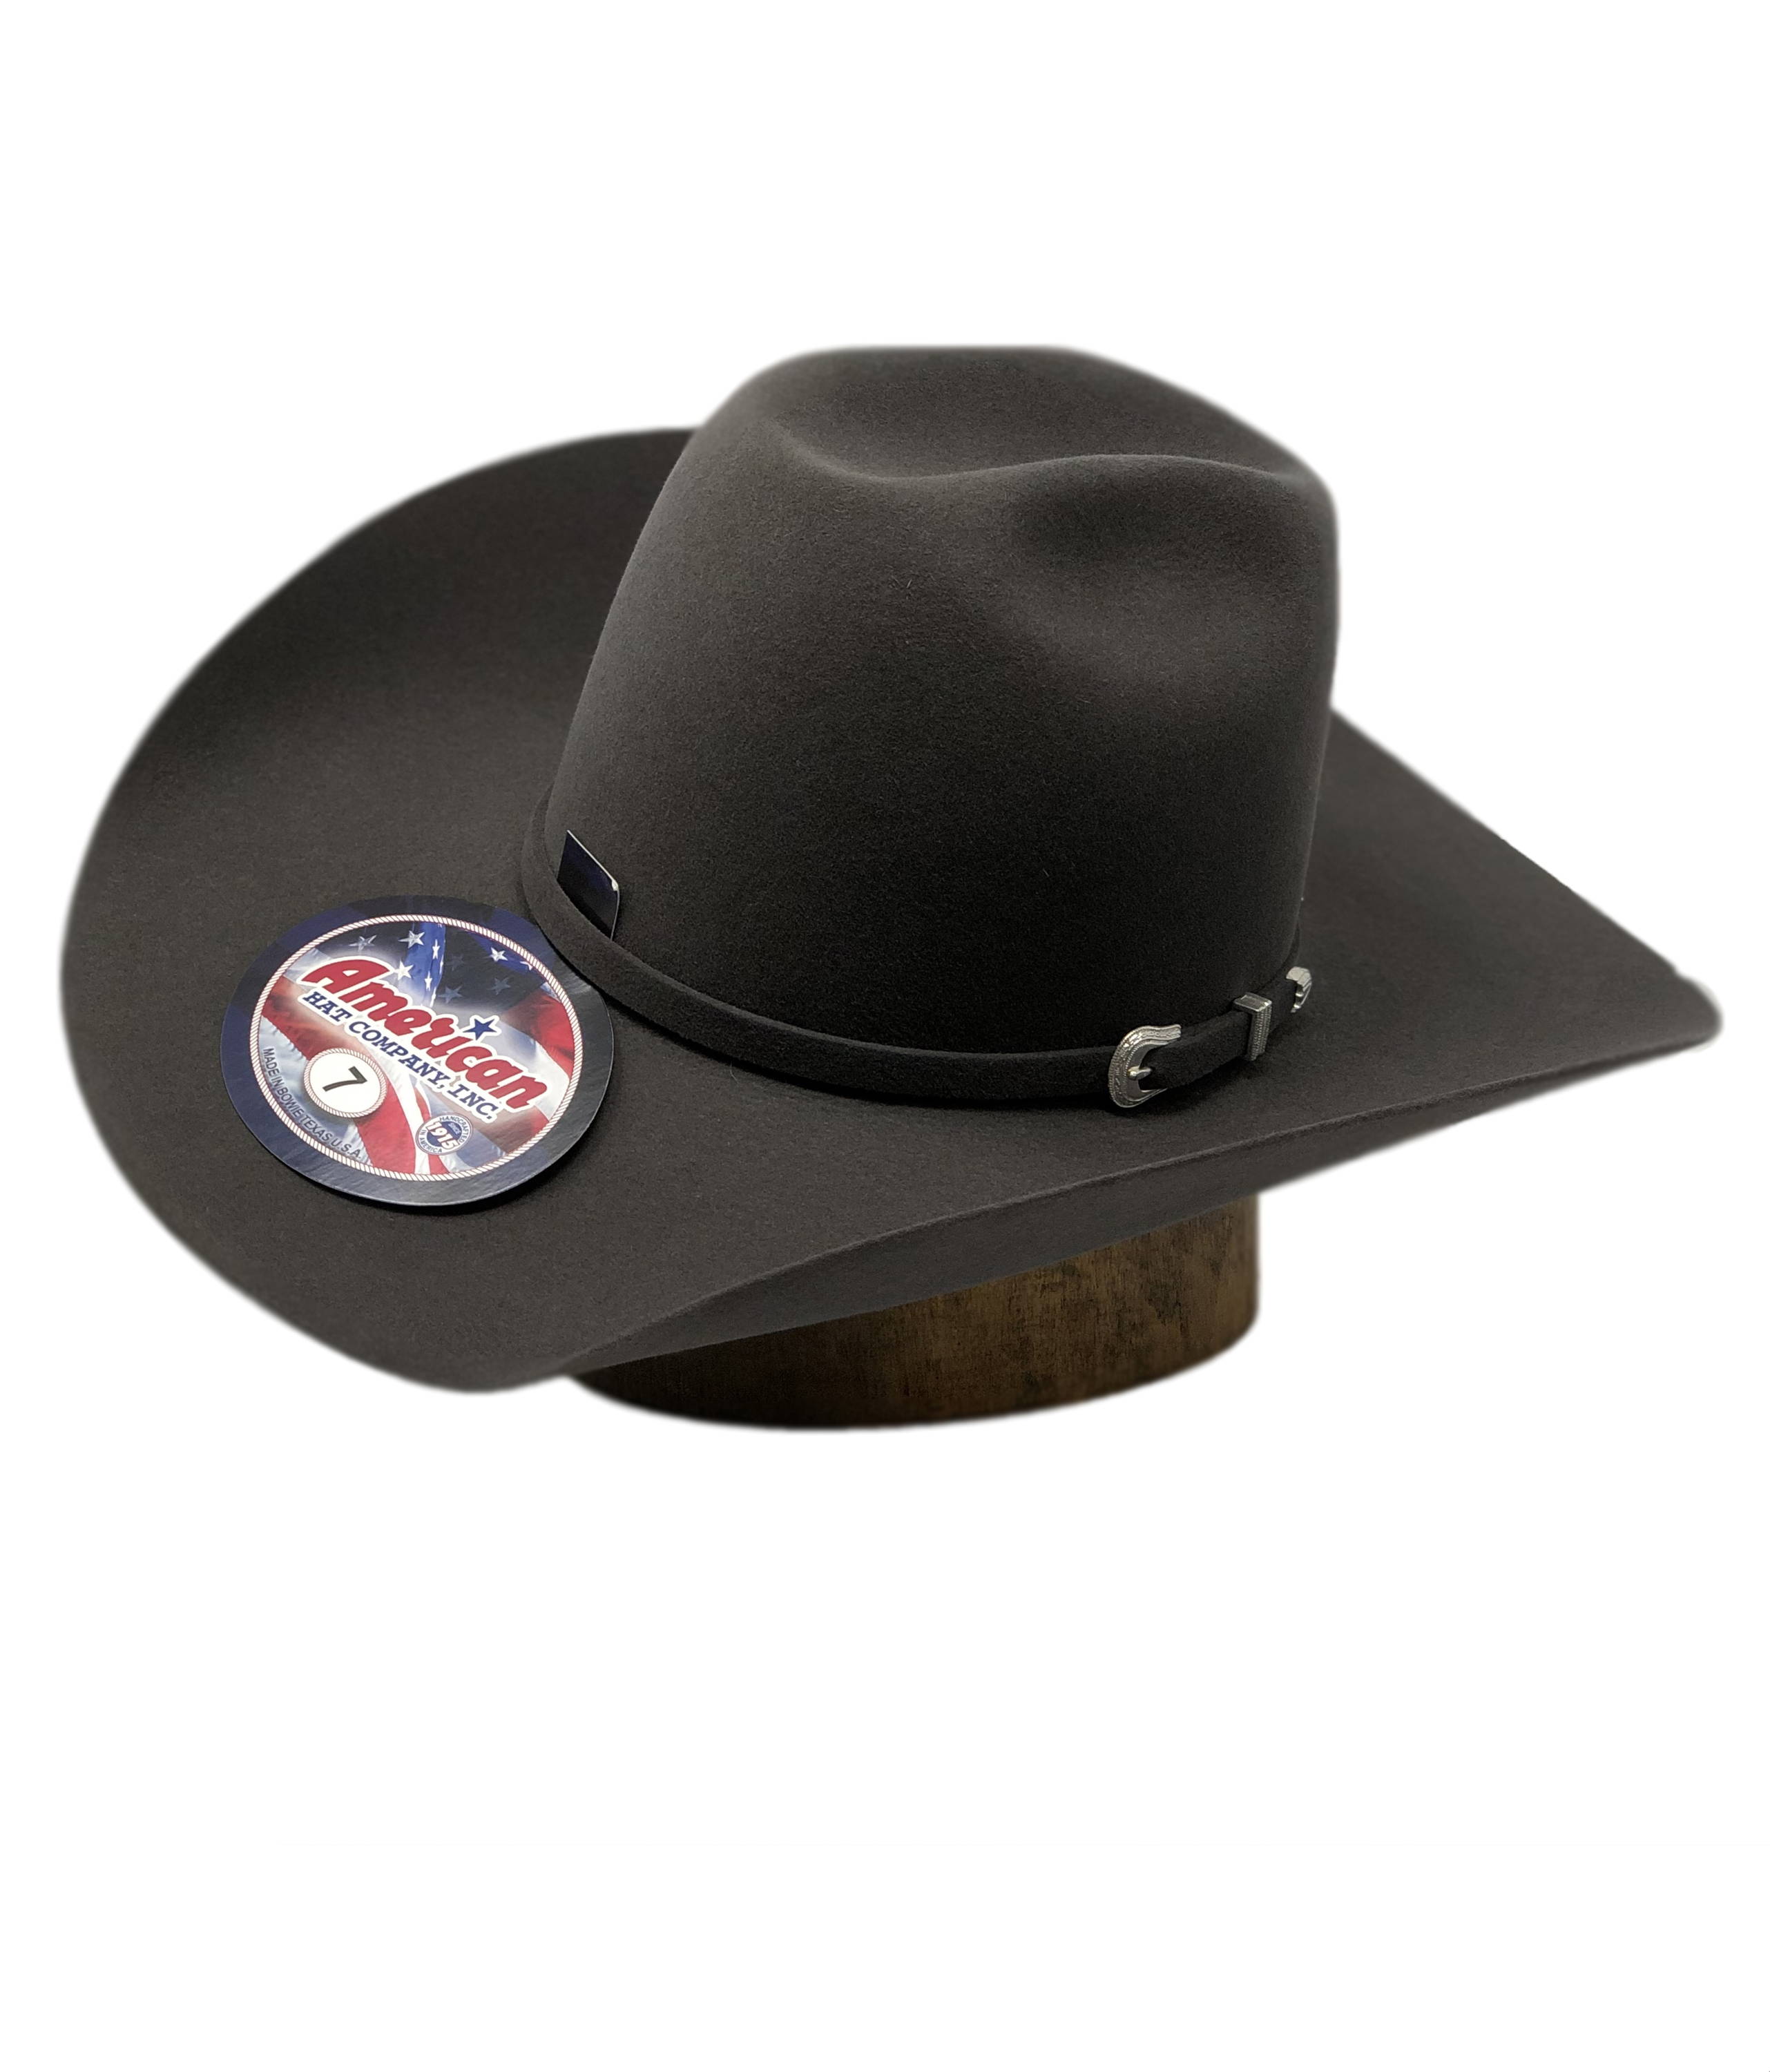 2020 Jobes Hats Straw Hat “ Orange ” Poly Rope 4”1/4 brim